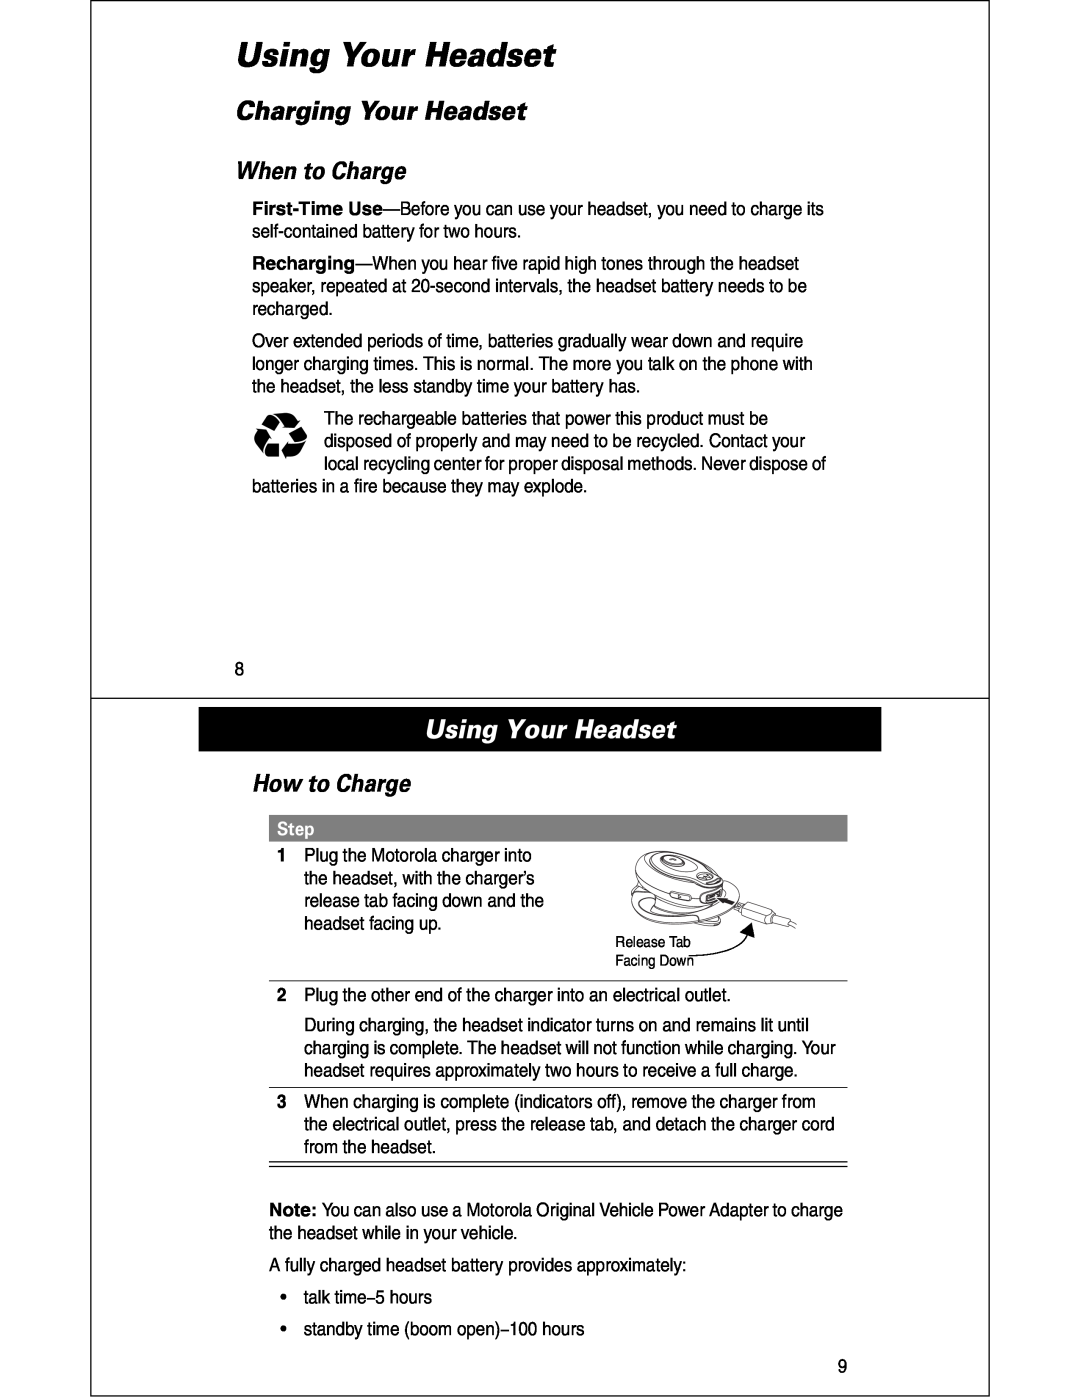 Motorola HS810 manual Using Your Headset, Charging Your Headset, When to Charge, How to Charge, Step 